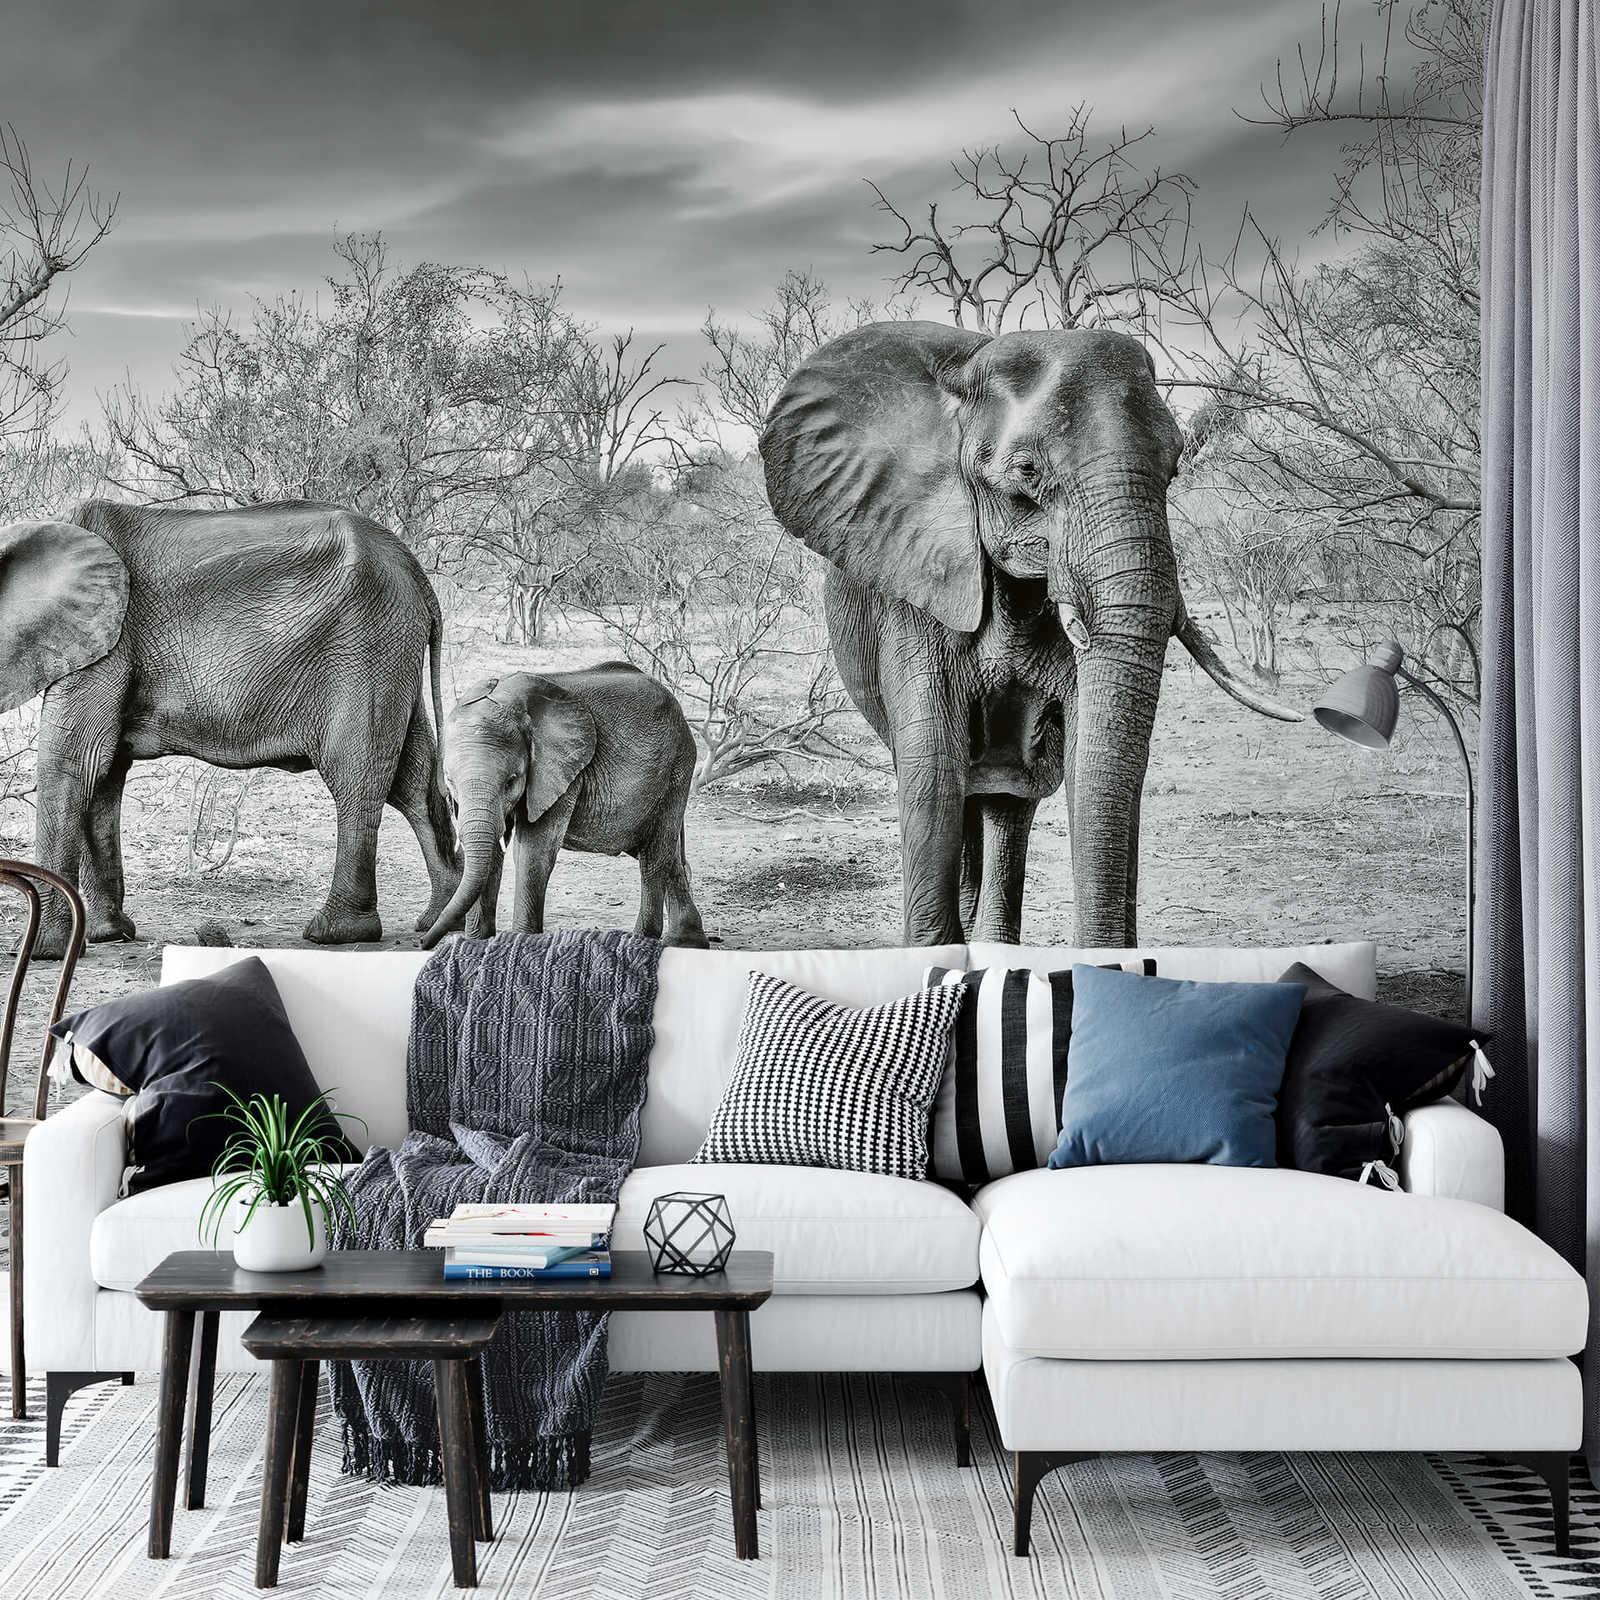             Photo wallpaper elephants family - grey, white, black
        